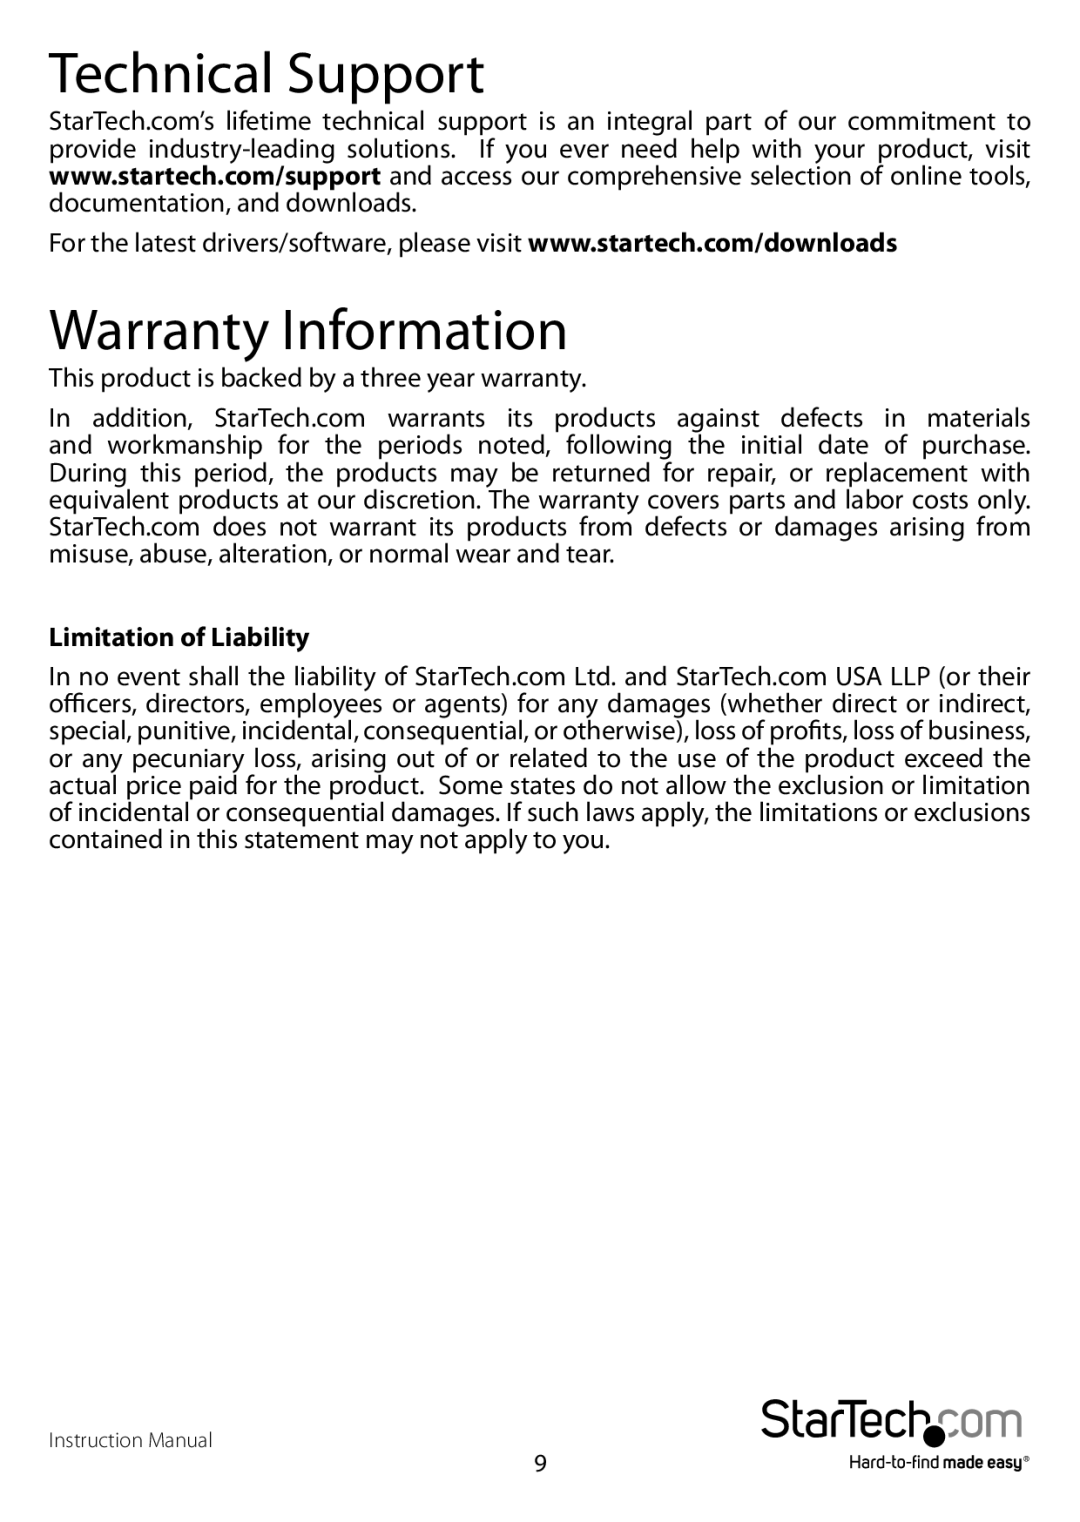 StarTech.com SV431-DVIUA manual Technical Support, Warranty Information, Limitation of Liability 